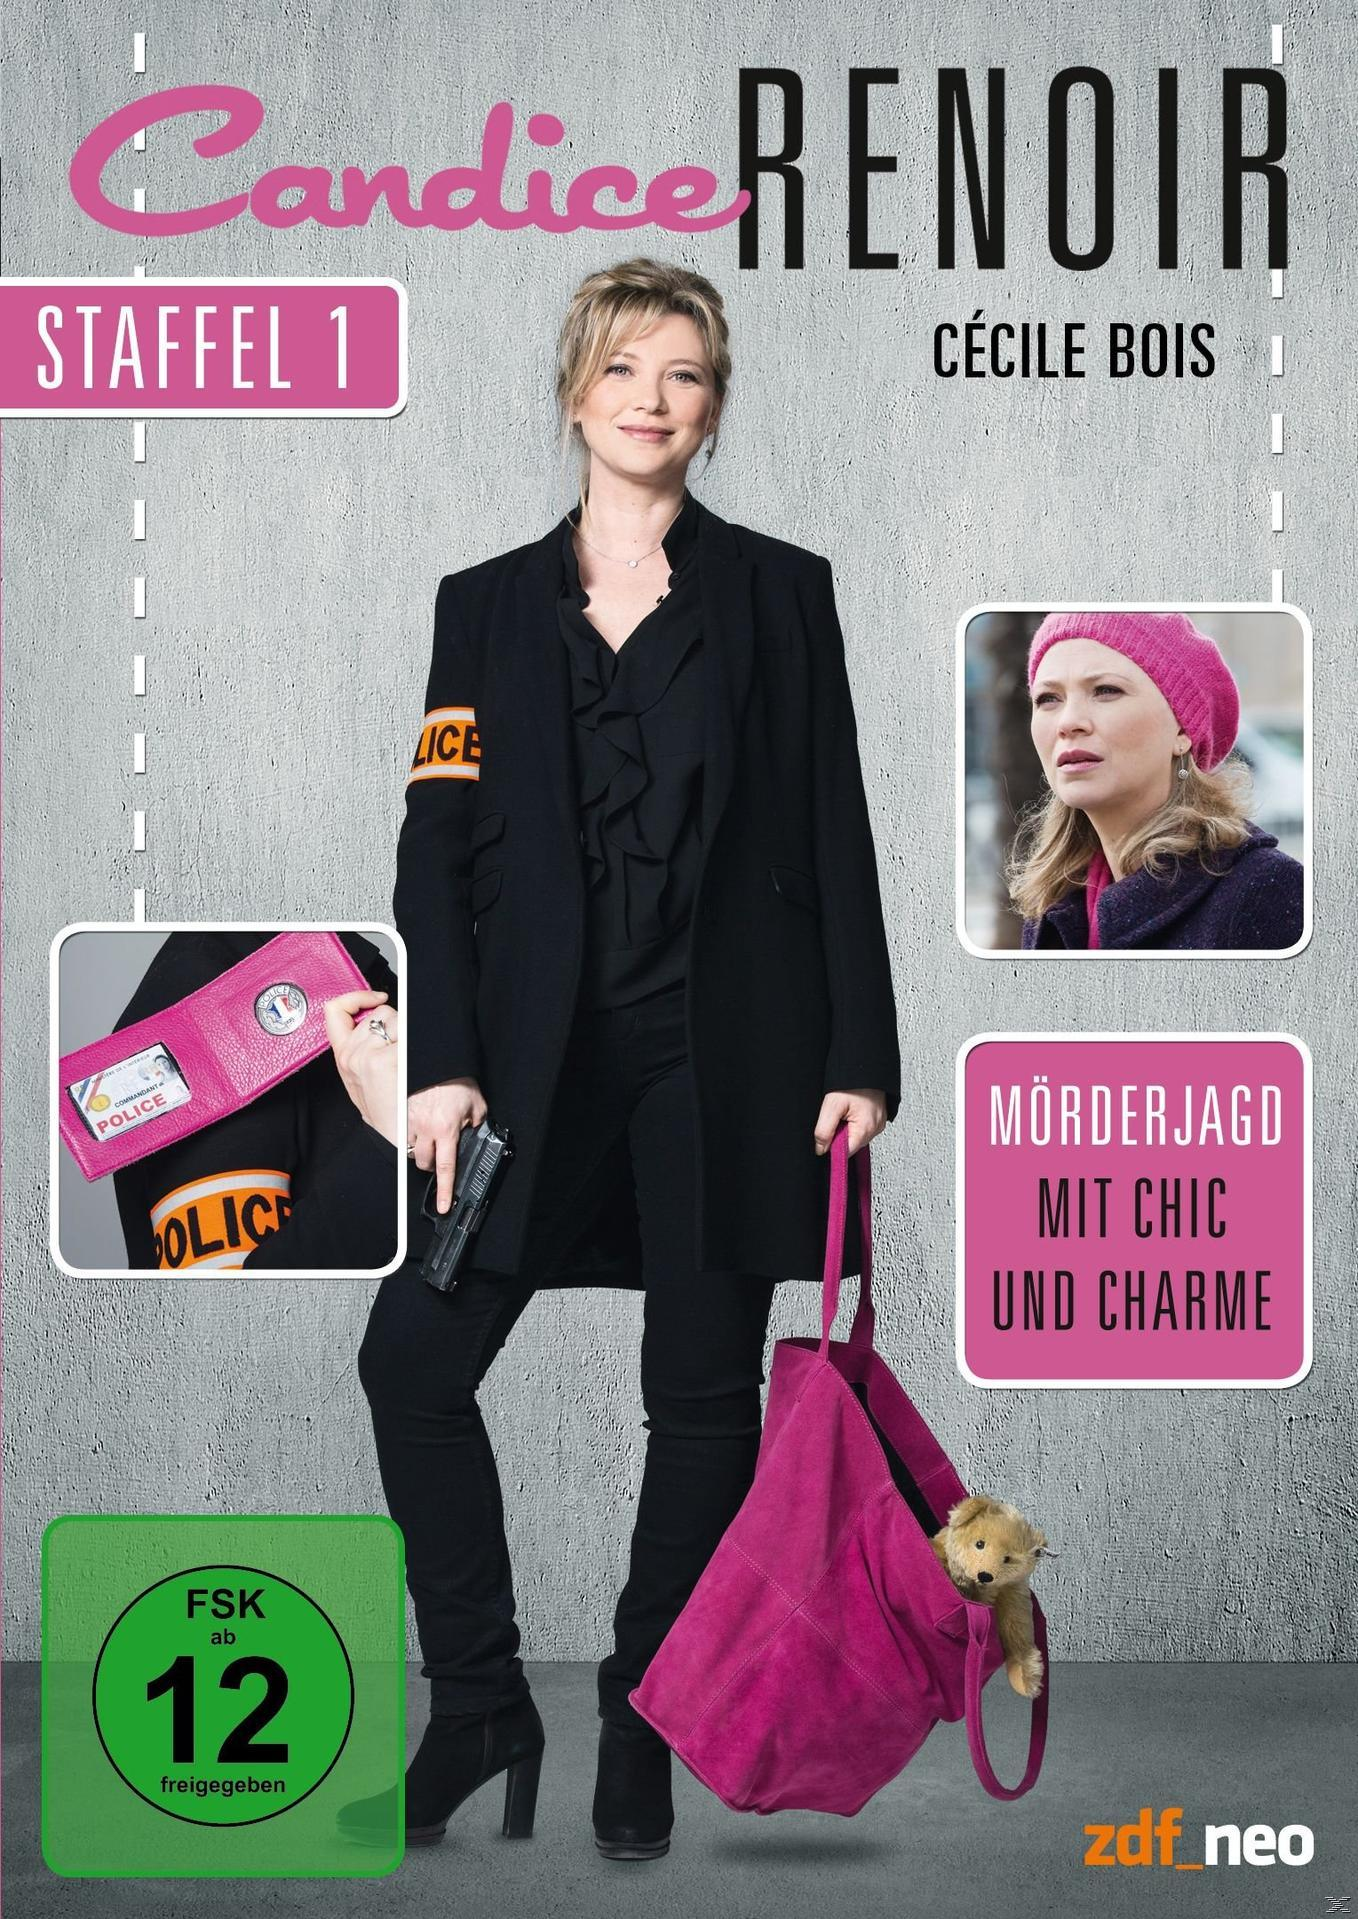 DVD 1 Candice - Staffel Renoir